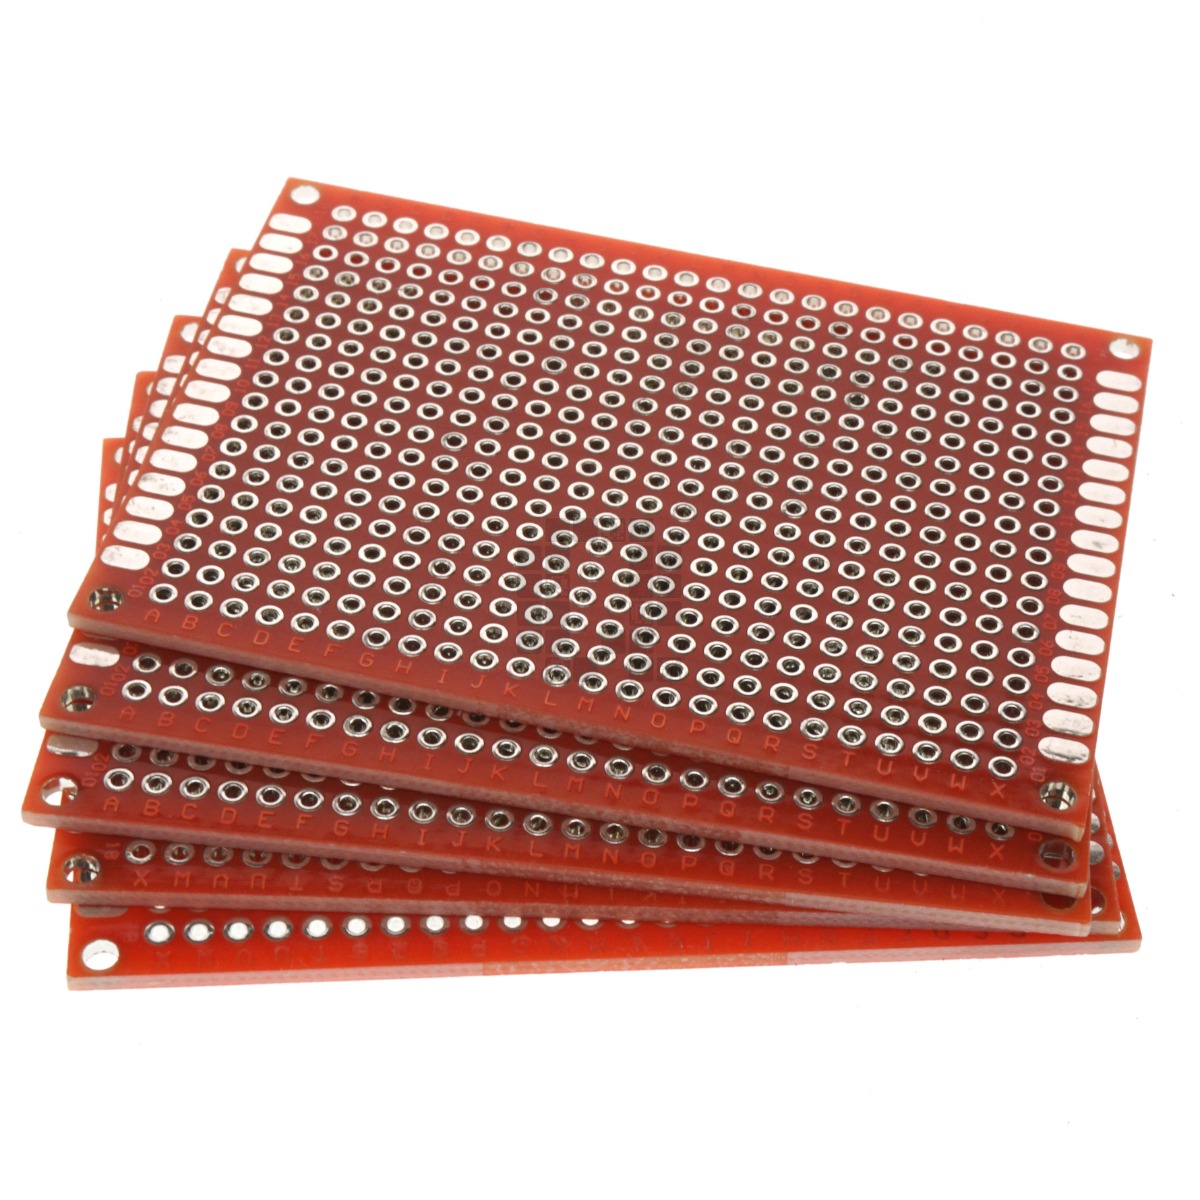 5cm x 7cm Red PCB Printed Circuit Board, 5 Pack, 432 Holes, 32 Pads